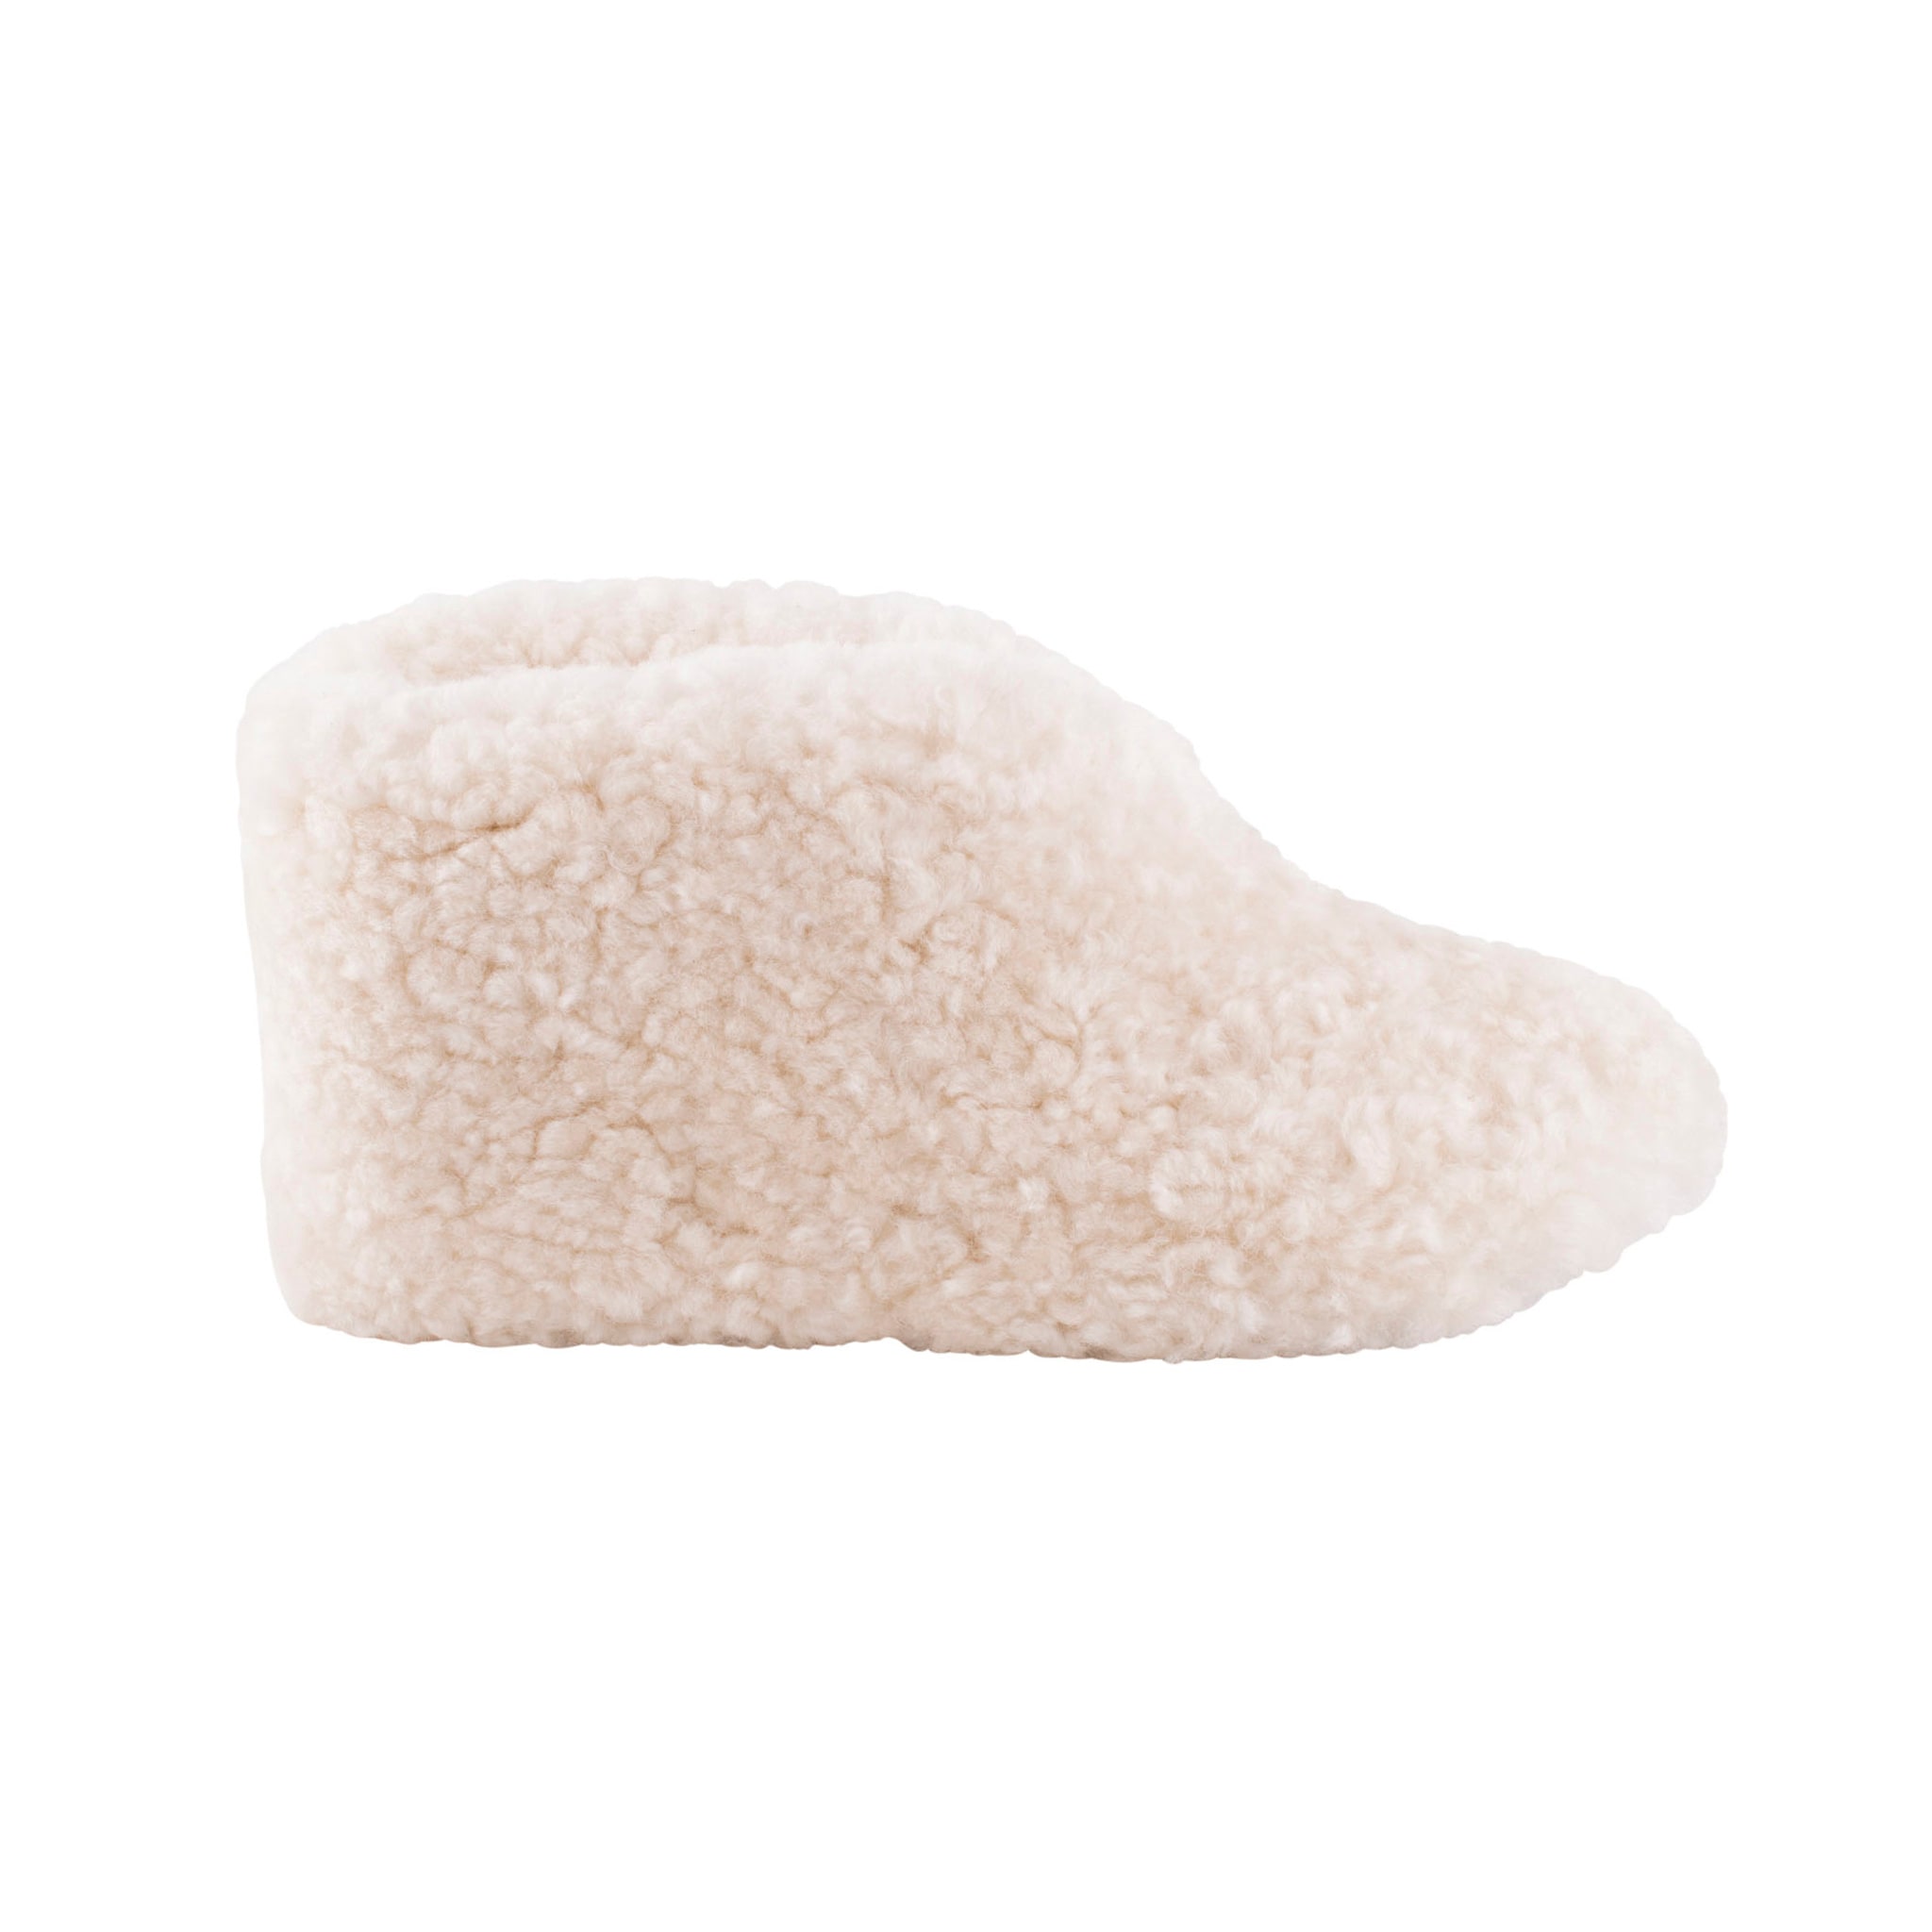 Ulla slipper in a white colour for kids or women